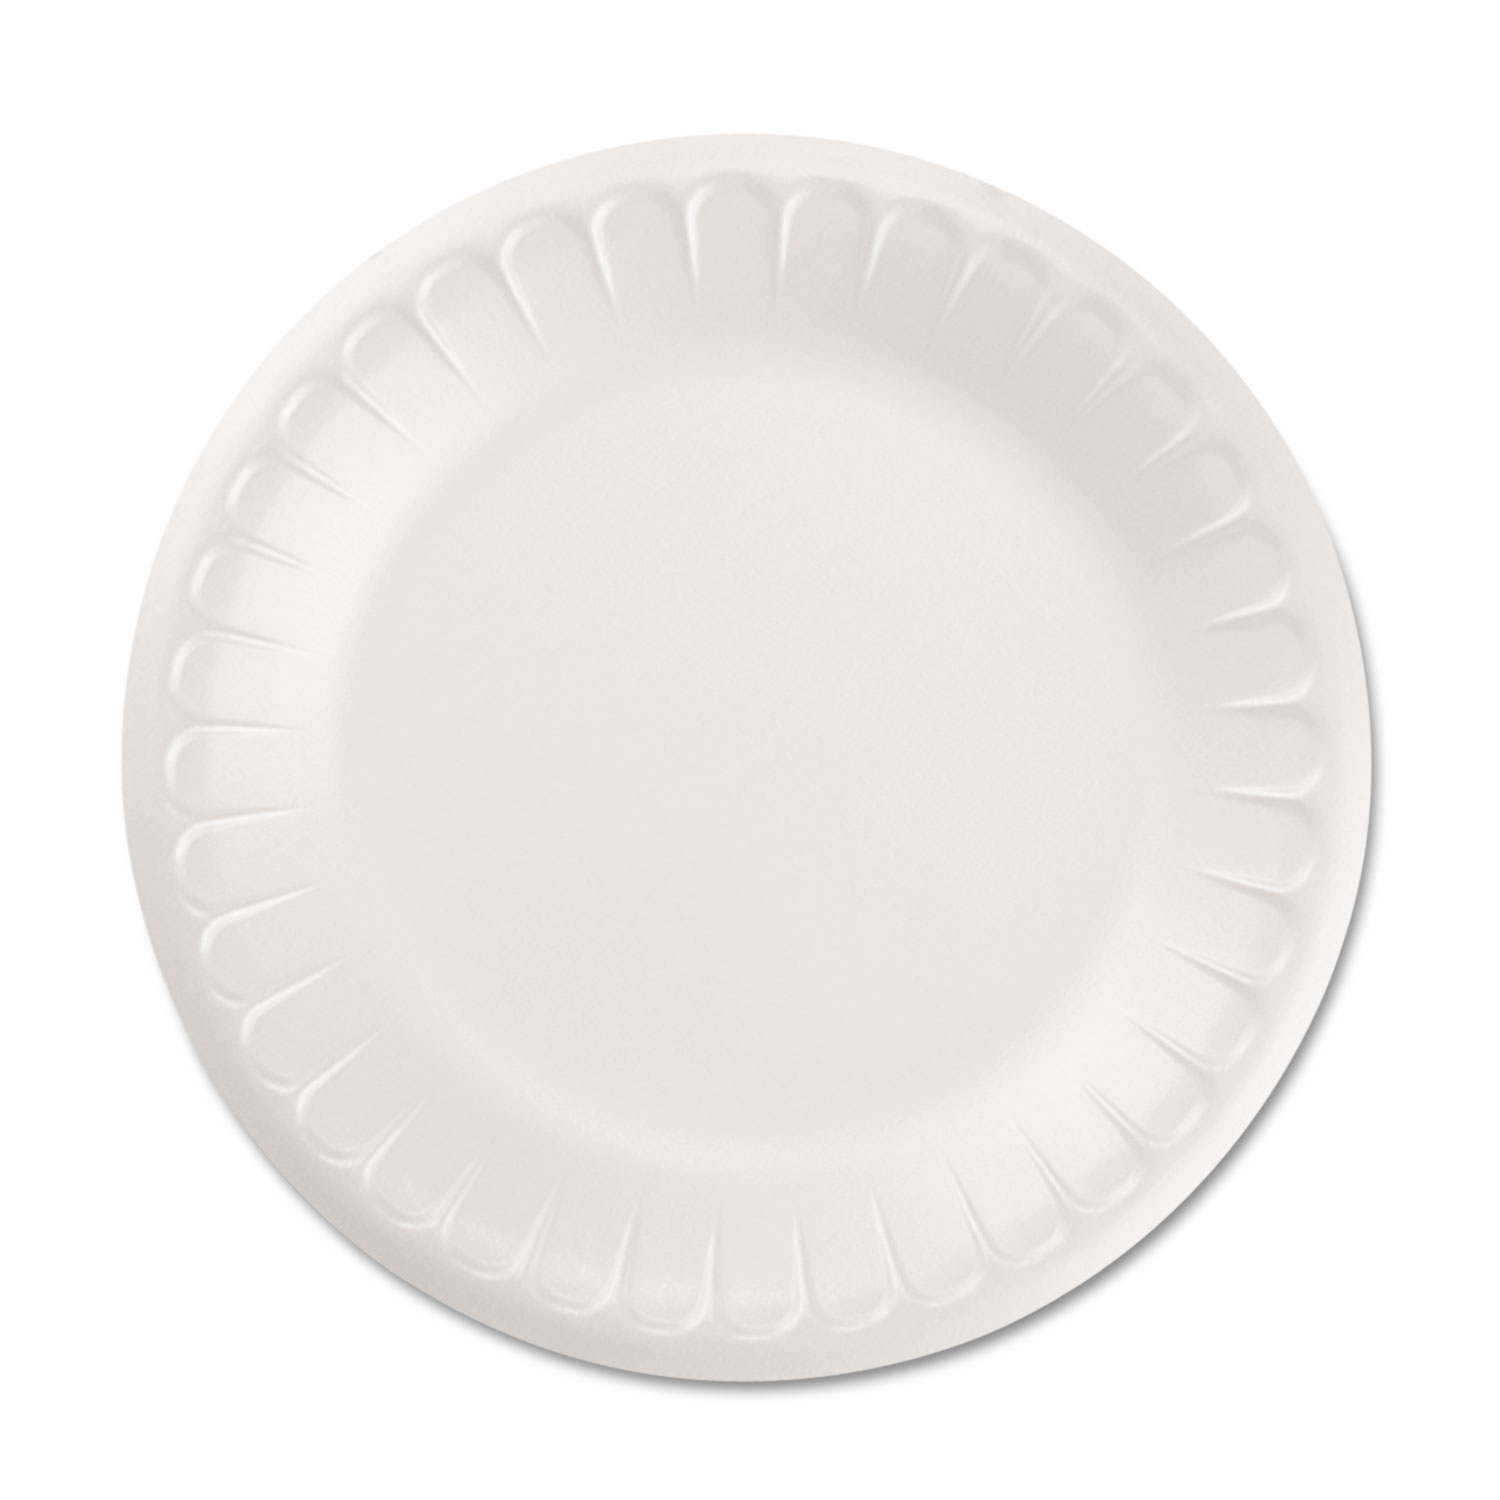 Soak Proof Tableware, Foam Plates, 7 dia, 60/Pack